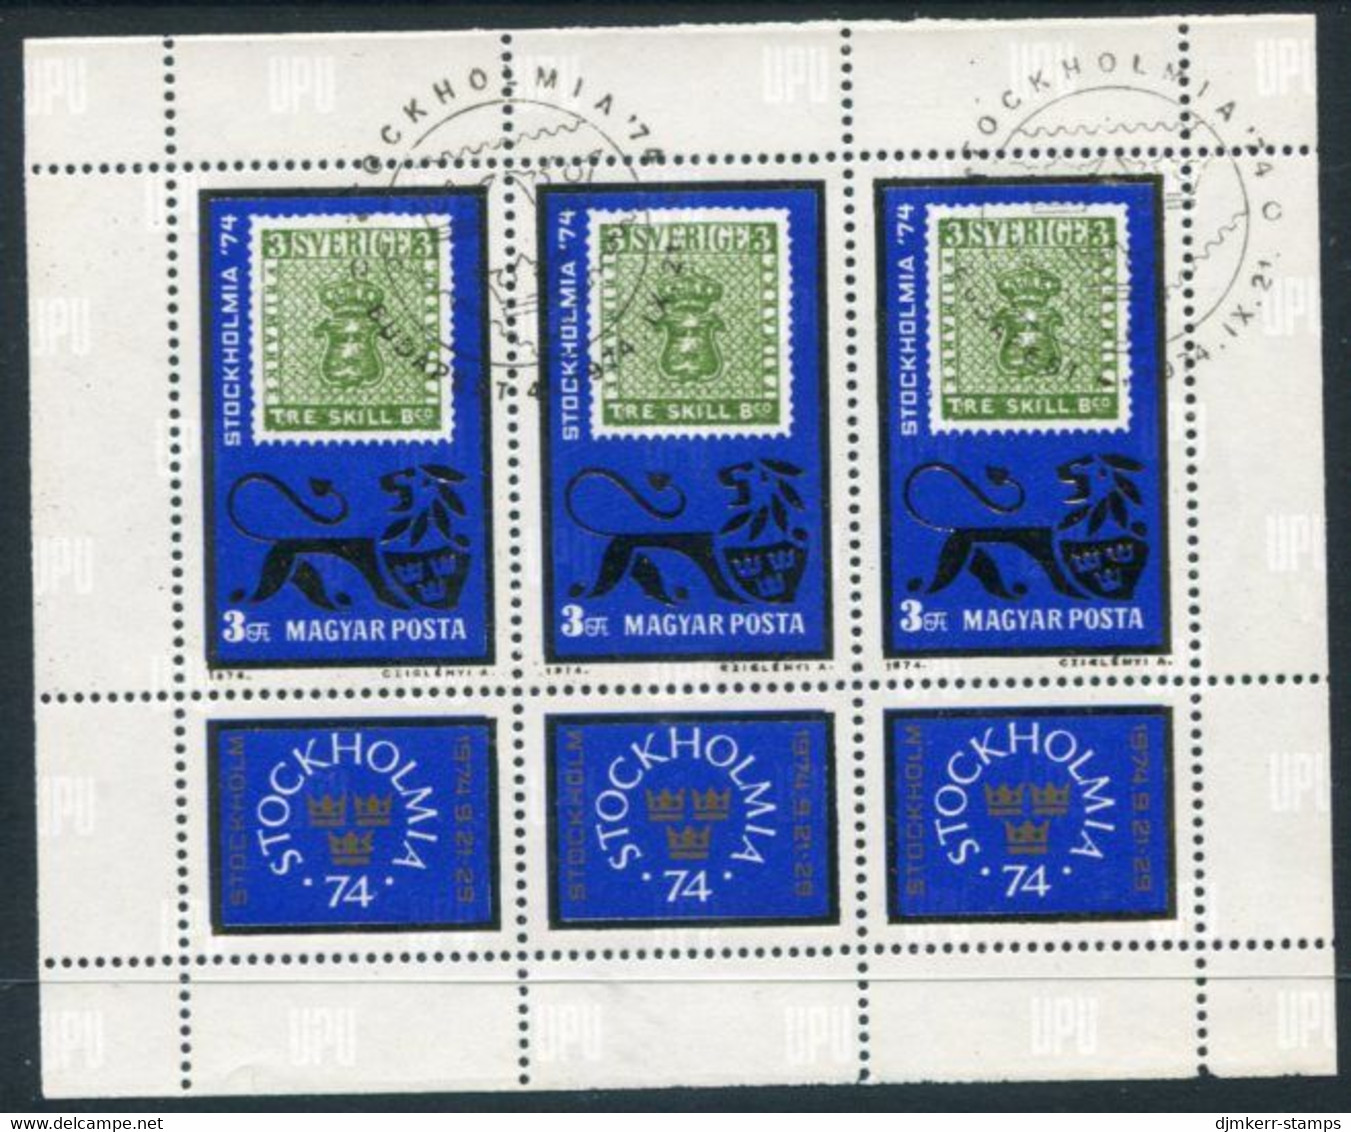 HUNGARY 1974 STOCKHOLMIA Stamp Exhibition Sheetlet Used.  Michel 2981 Kb - Blocchi & Foglietti